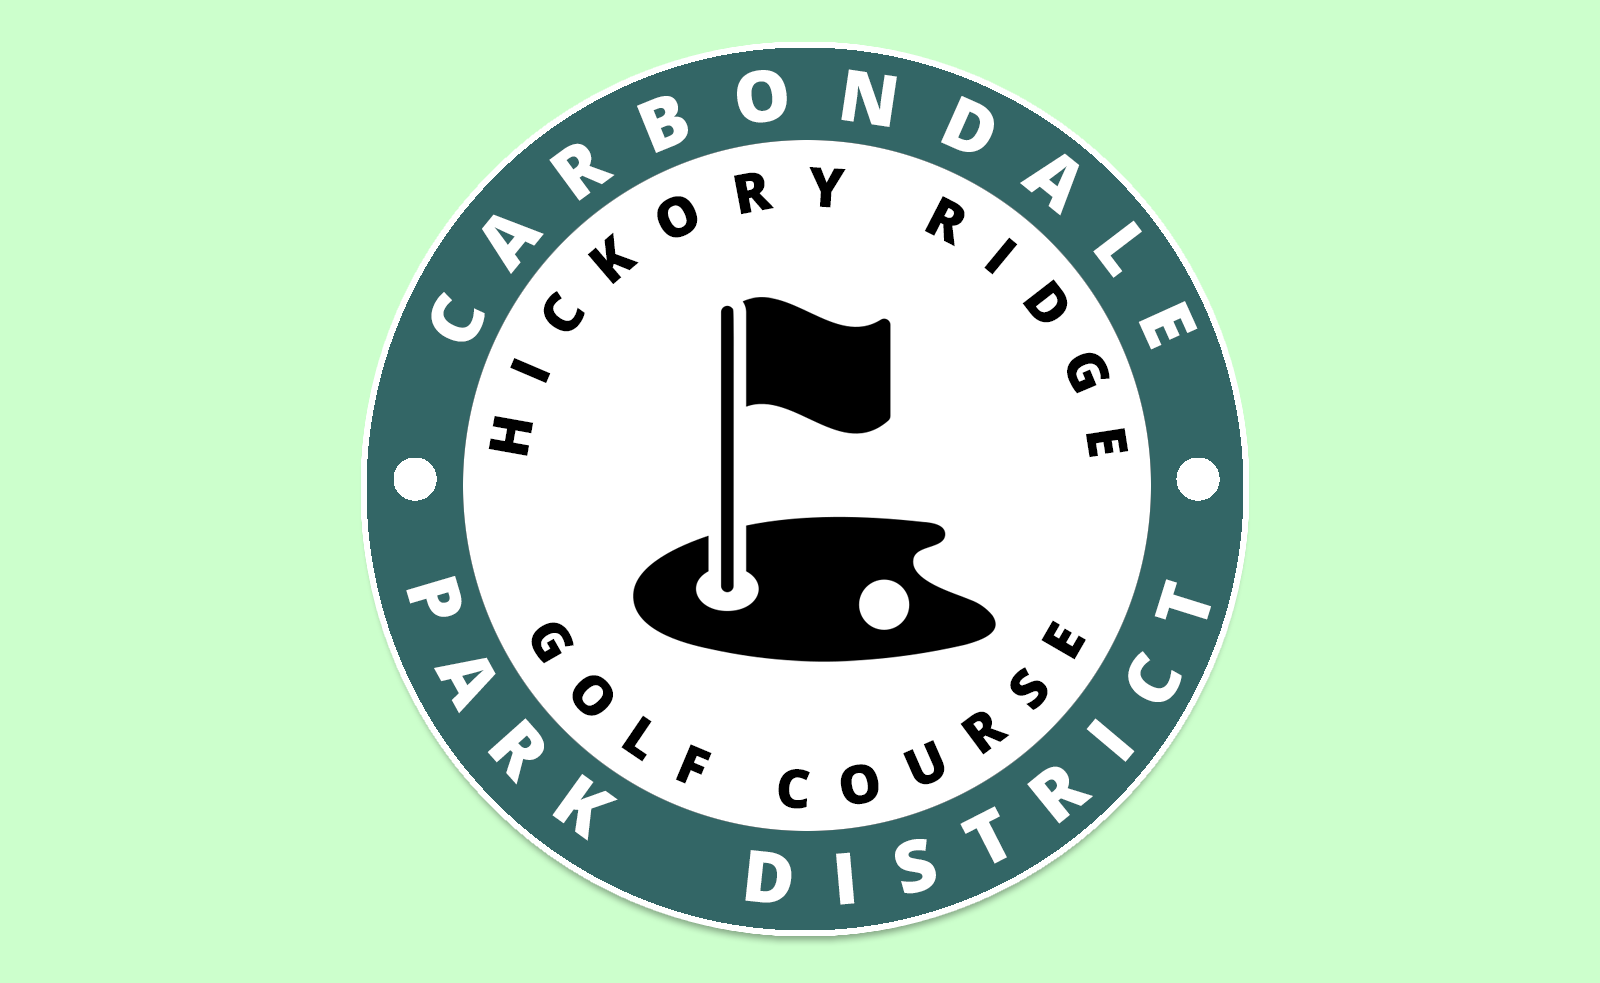 Hickory Ridge golf course